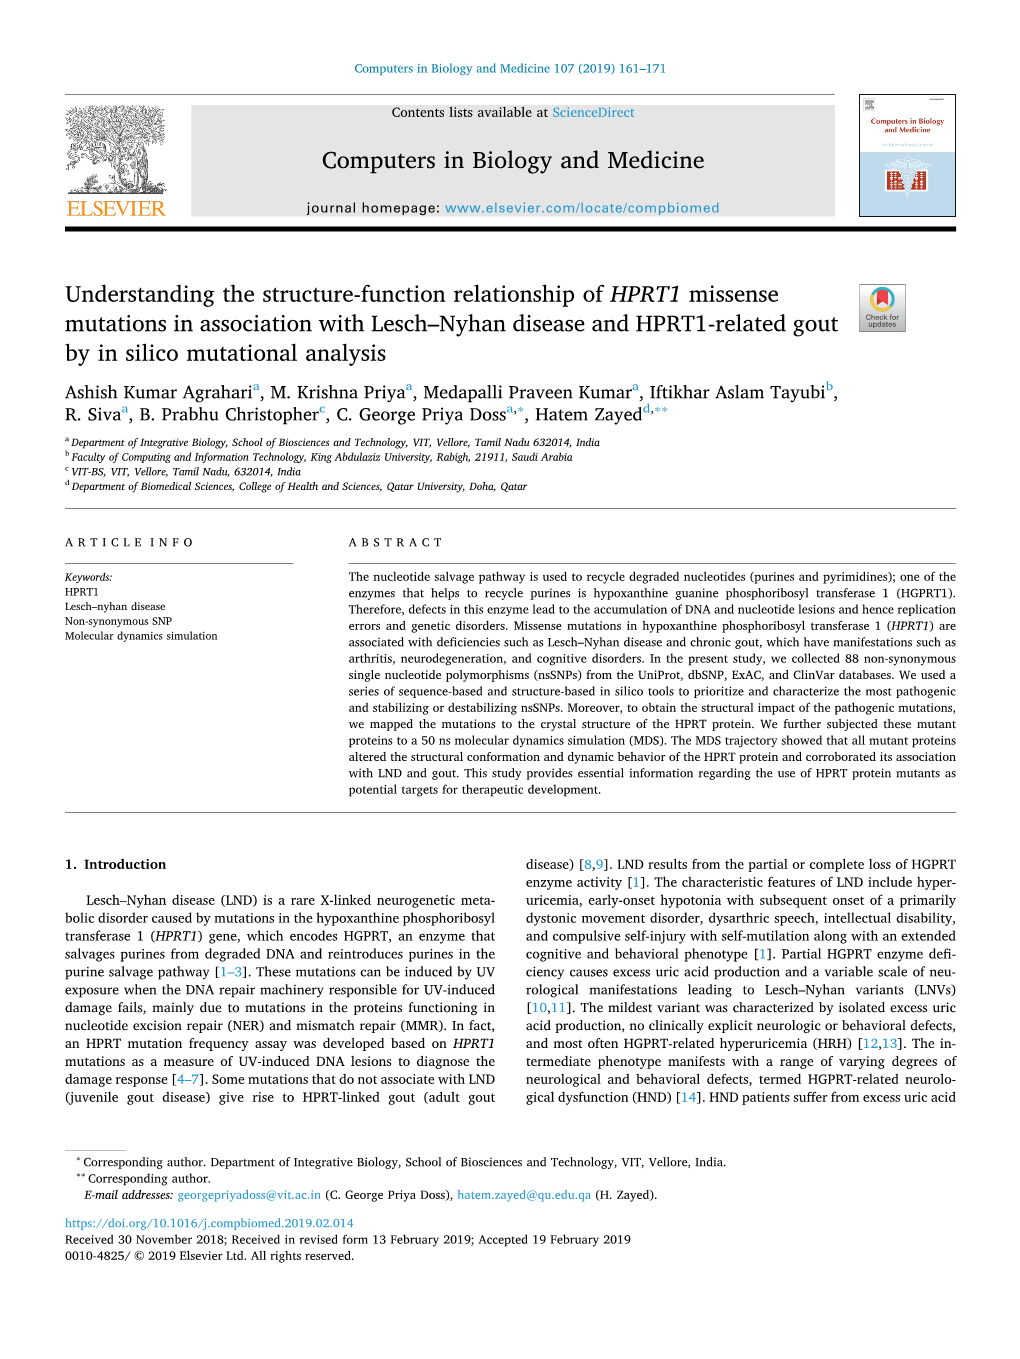 Understanding the Structure-Function Relationship of HPRT1 Missense